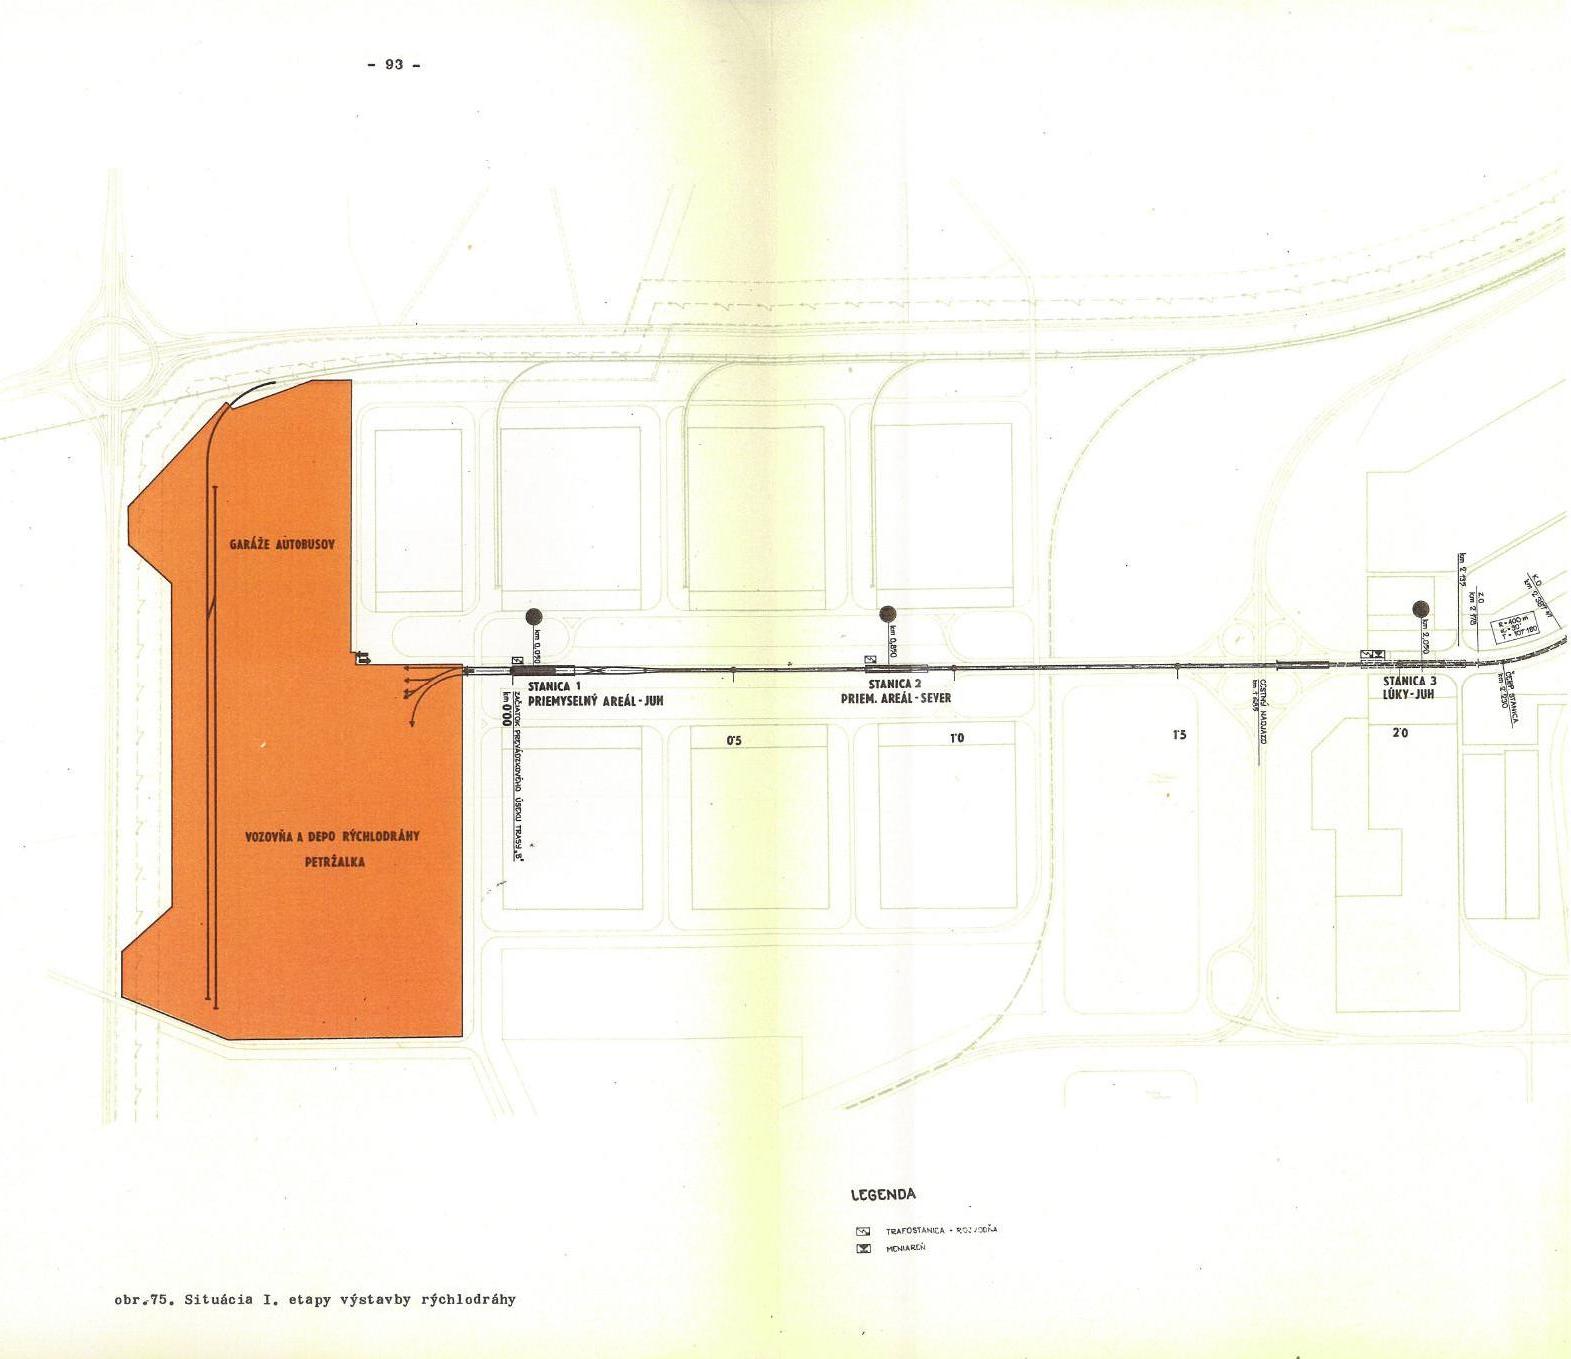 Metro I etapa - trasa 2C 1-3